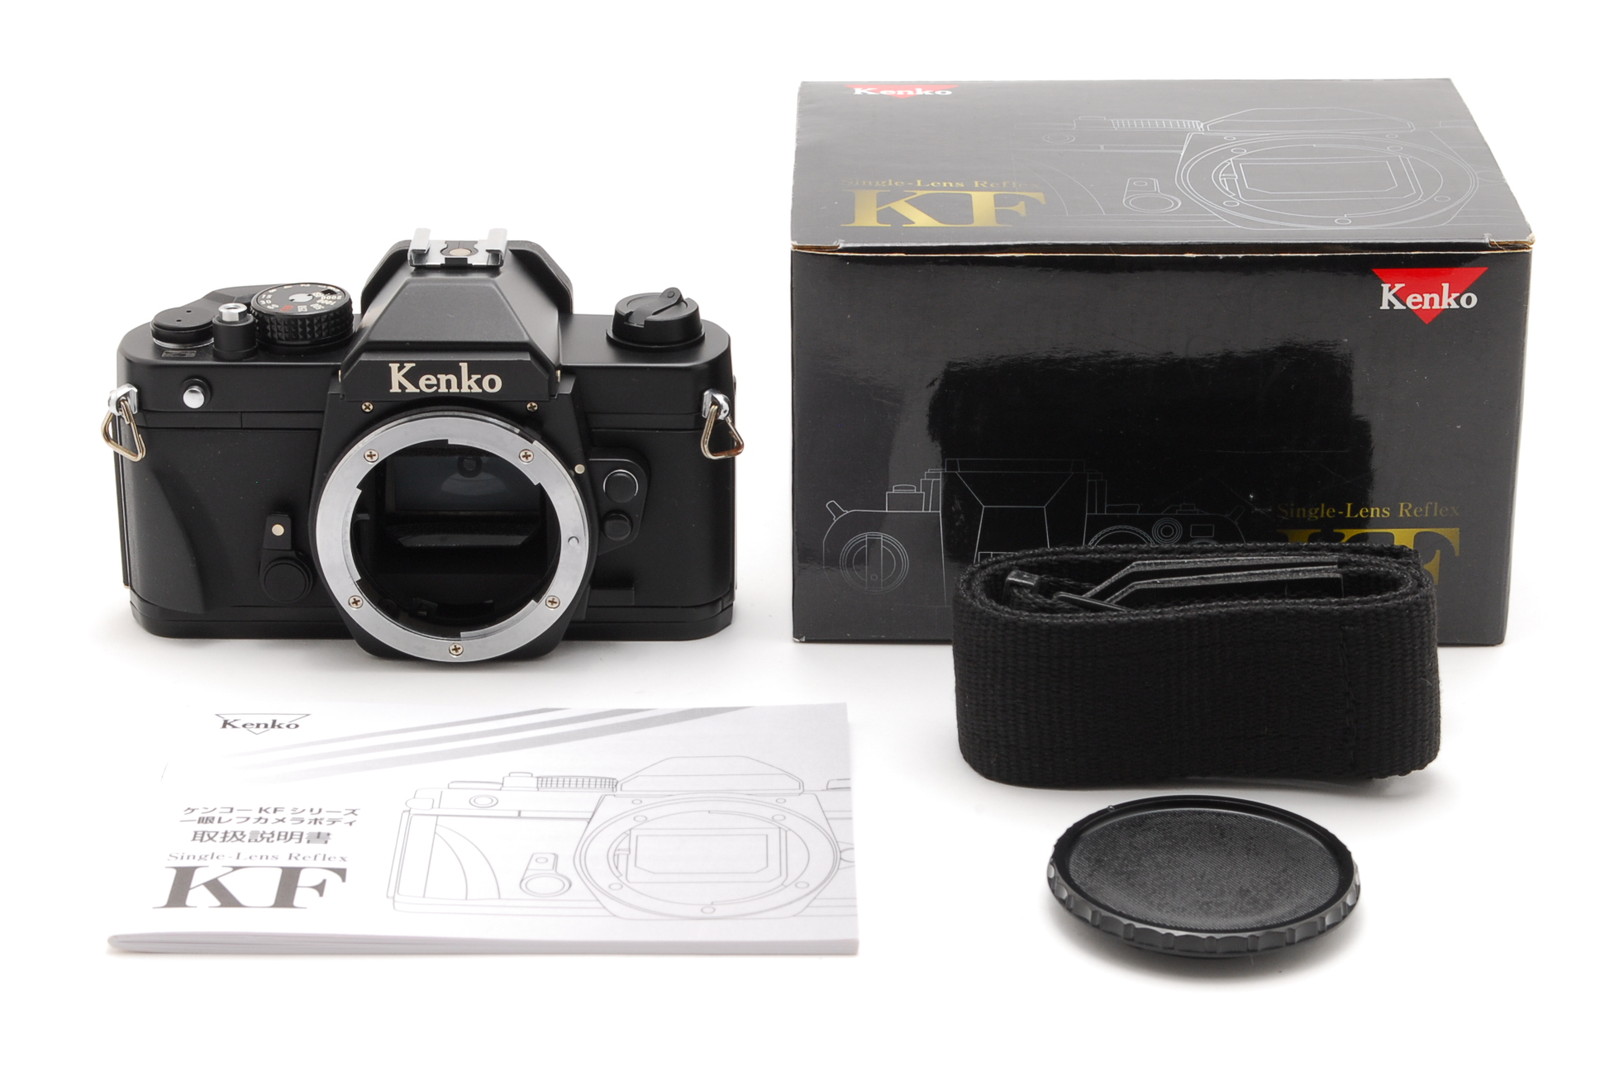 PROMOTION. RARE MINT Kenko KF-1N Nikon F Mount 35mm Film SLR, Box, Manual, Body Cap, Strap from Japan